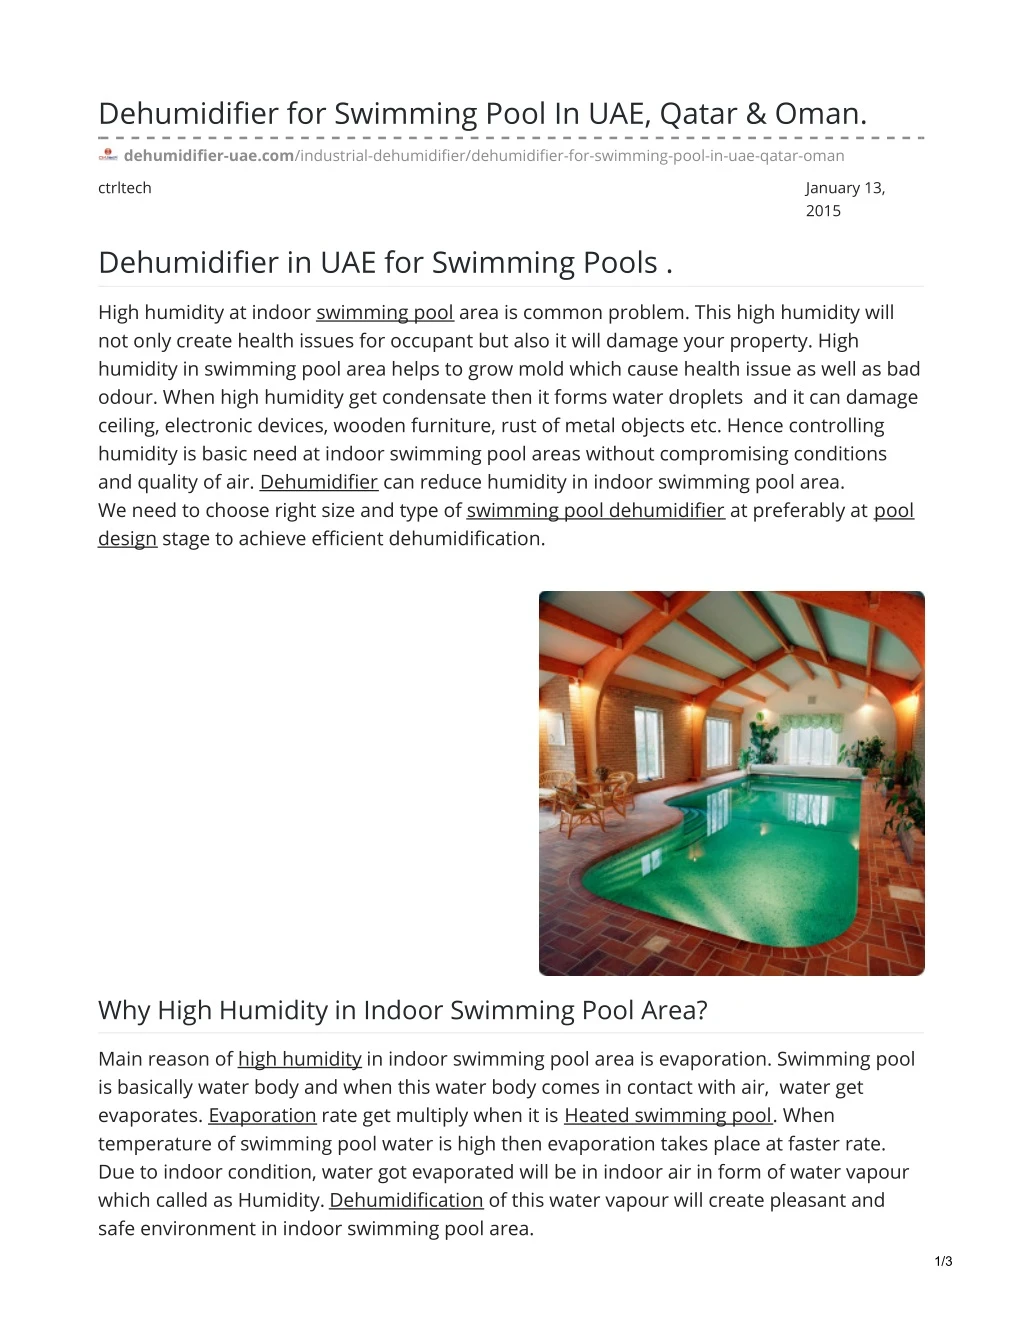 dehumidifier for swimming pool in uae qatar oman